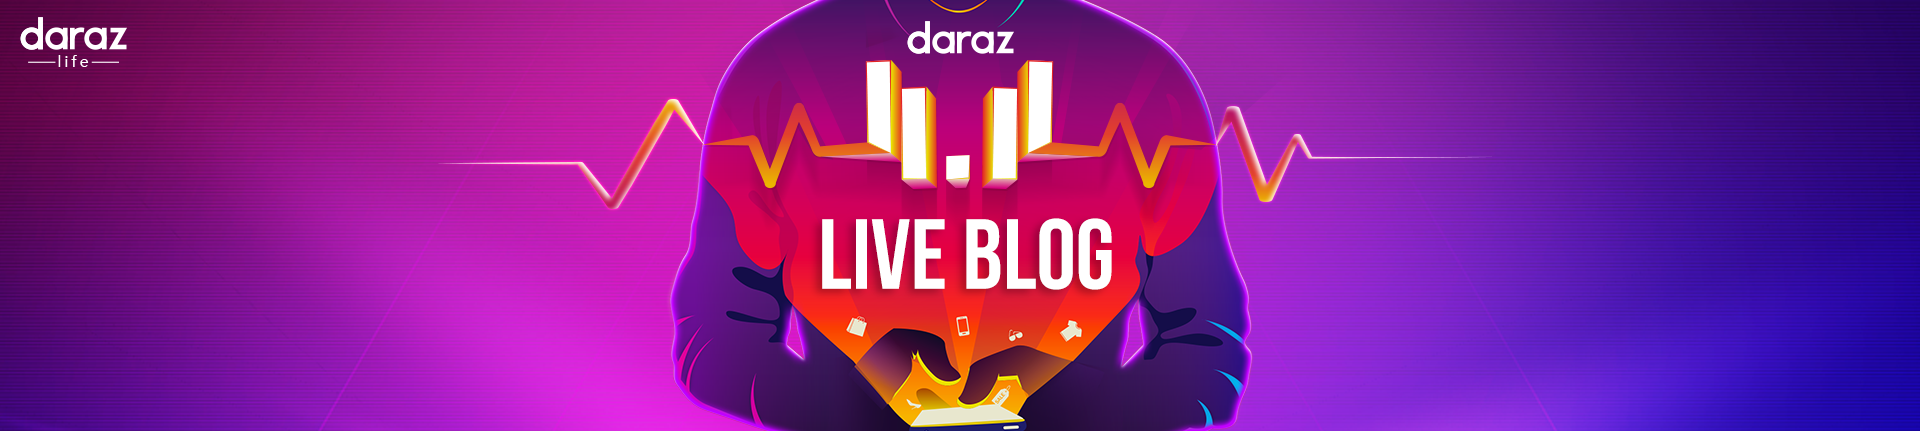  Daraz 11.11 Live Updates (2020)